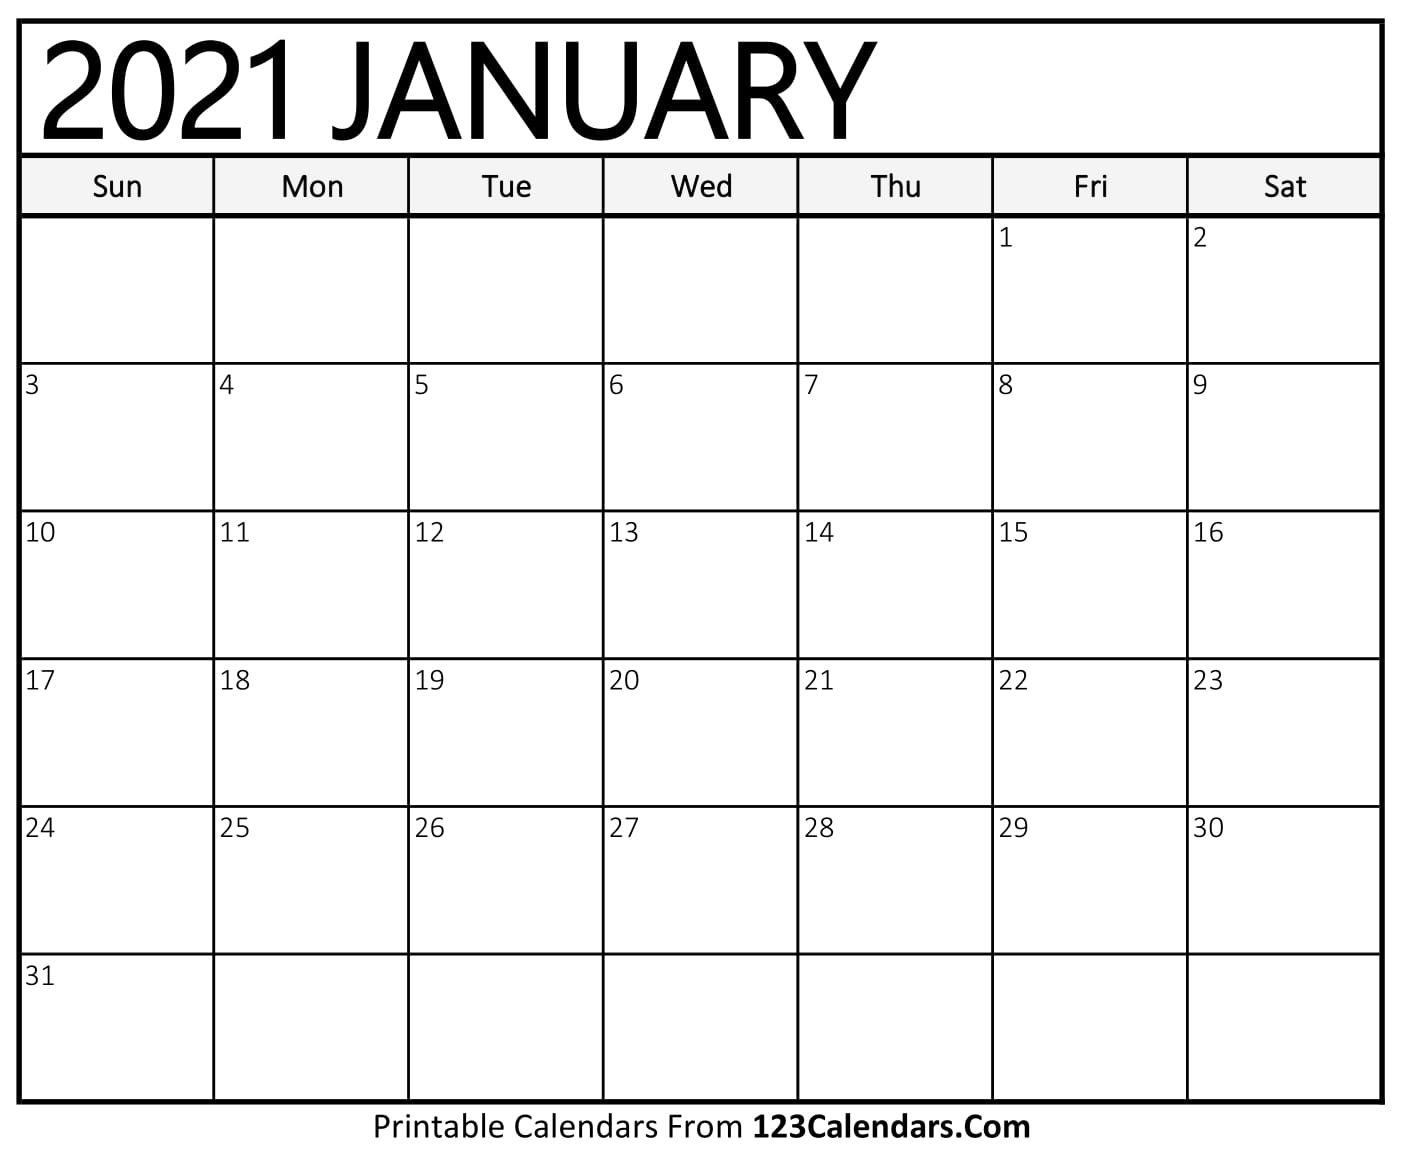 Blank January 2021 Calendar Printable January 2021 Calendar Templates | 123Calendars.com